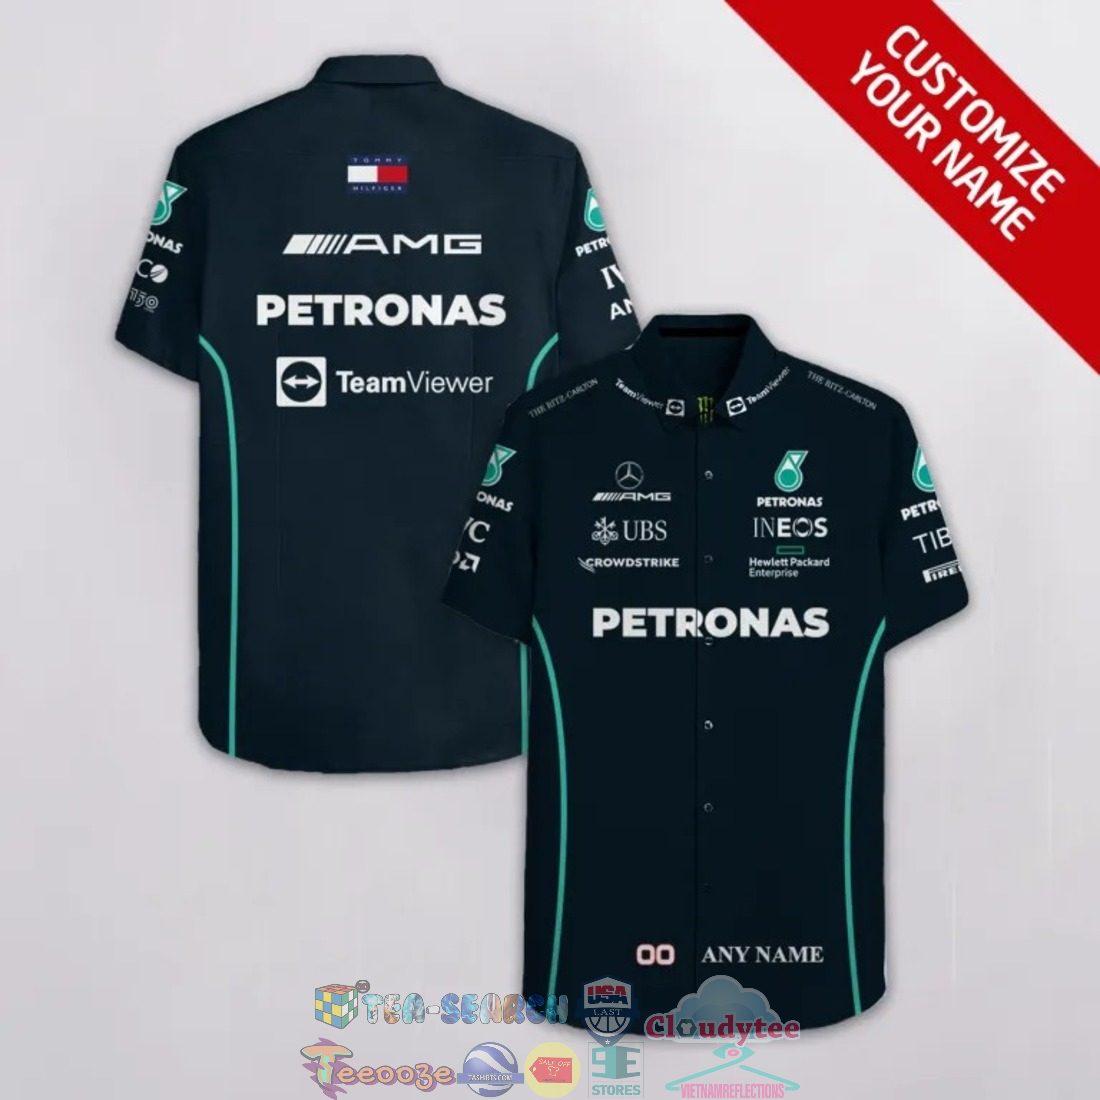 Mercedes AMG Petronas TeamViewer UBS Personalized Hawaiian Shirt